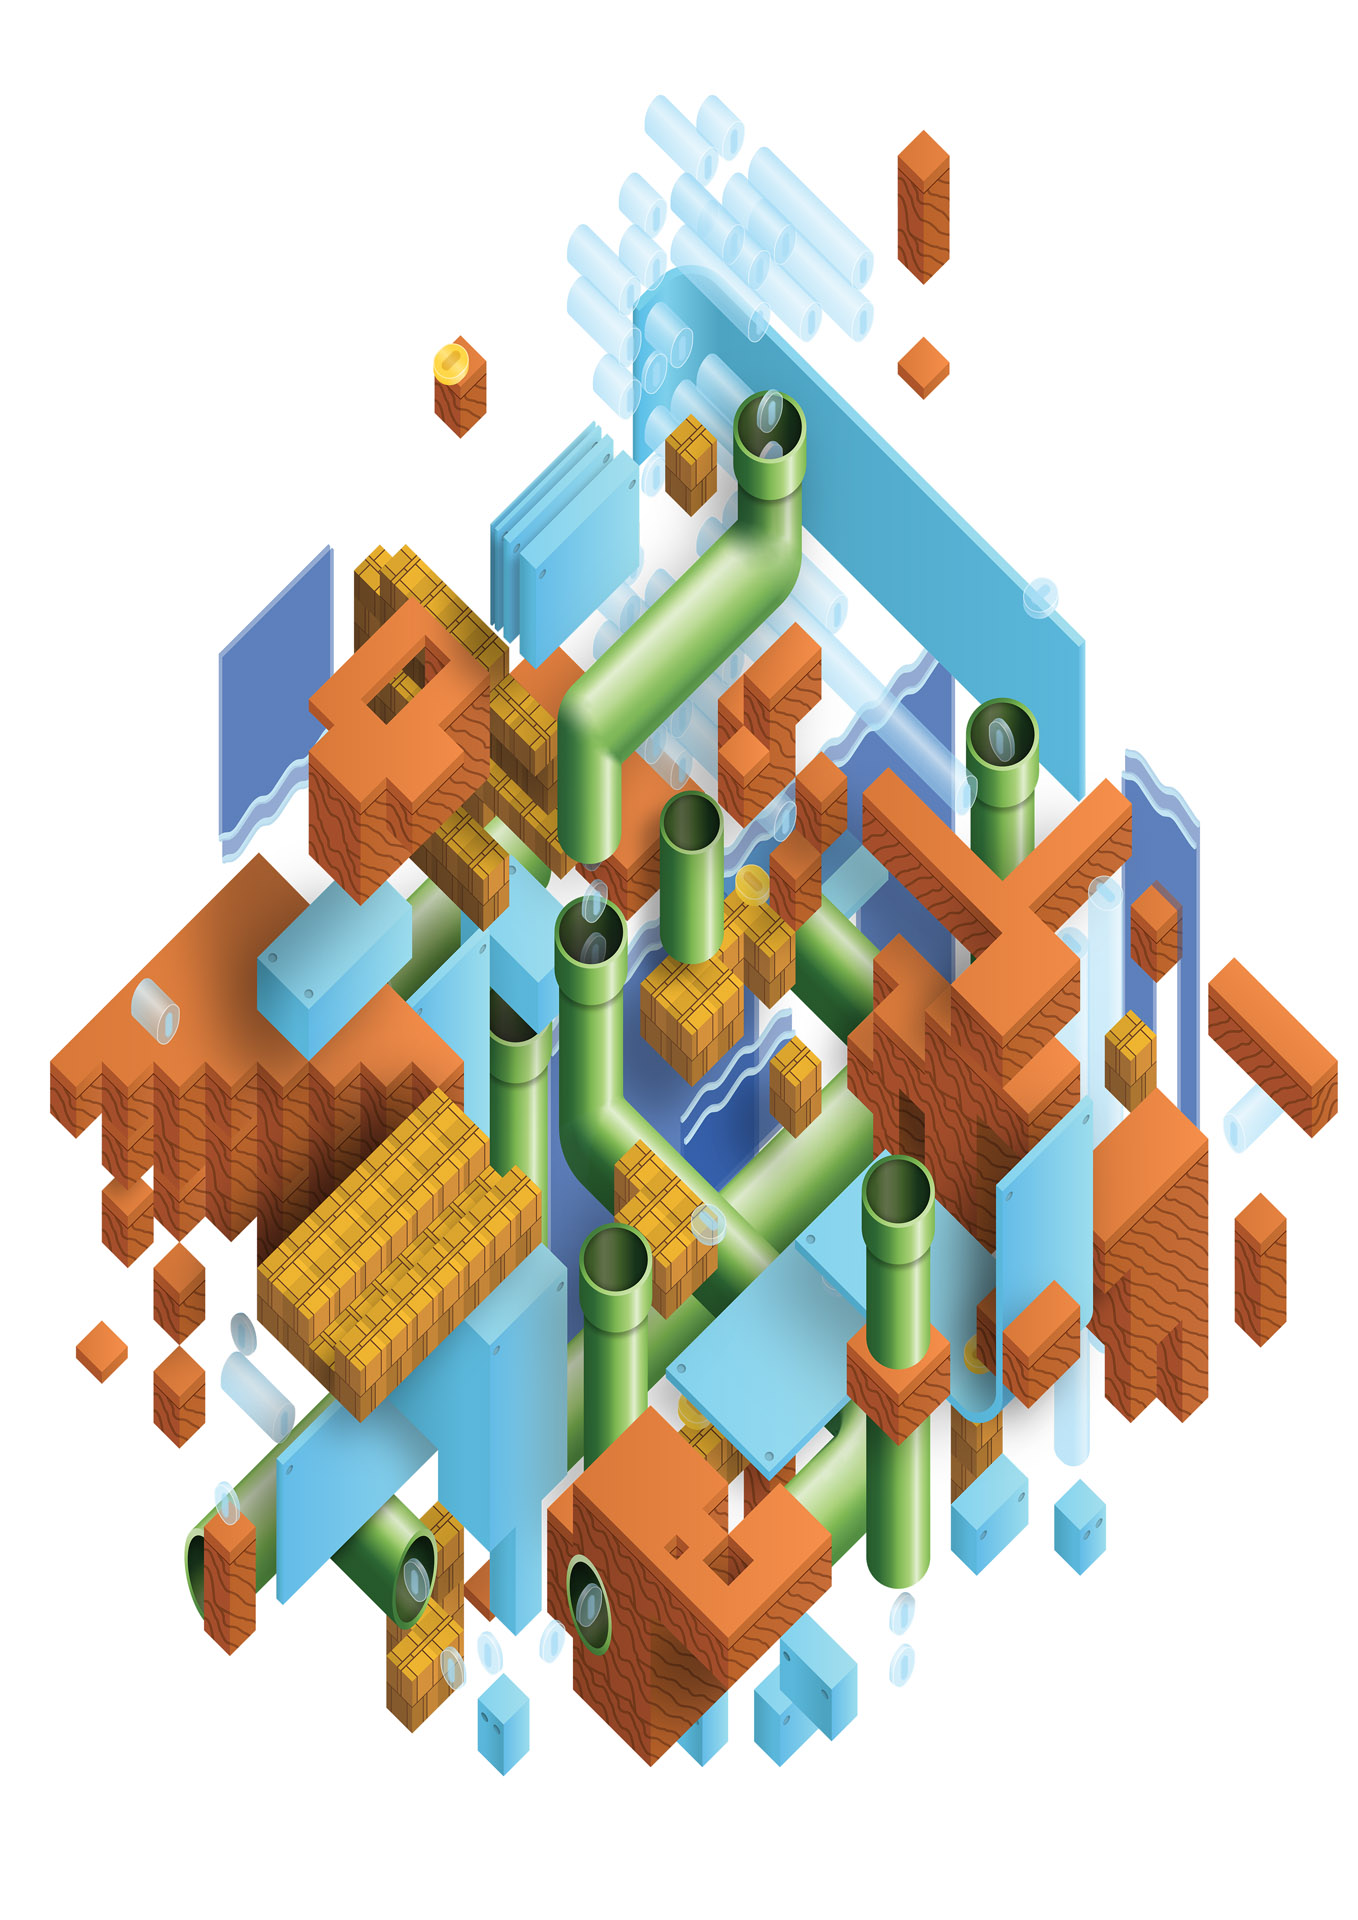 Final Mario World axonometric rendering